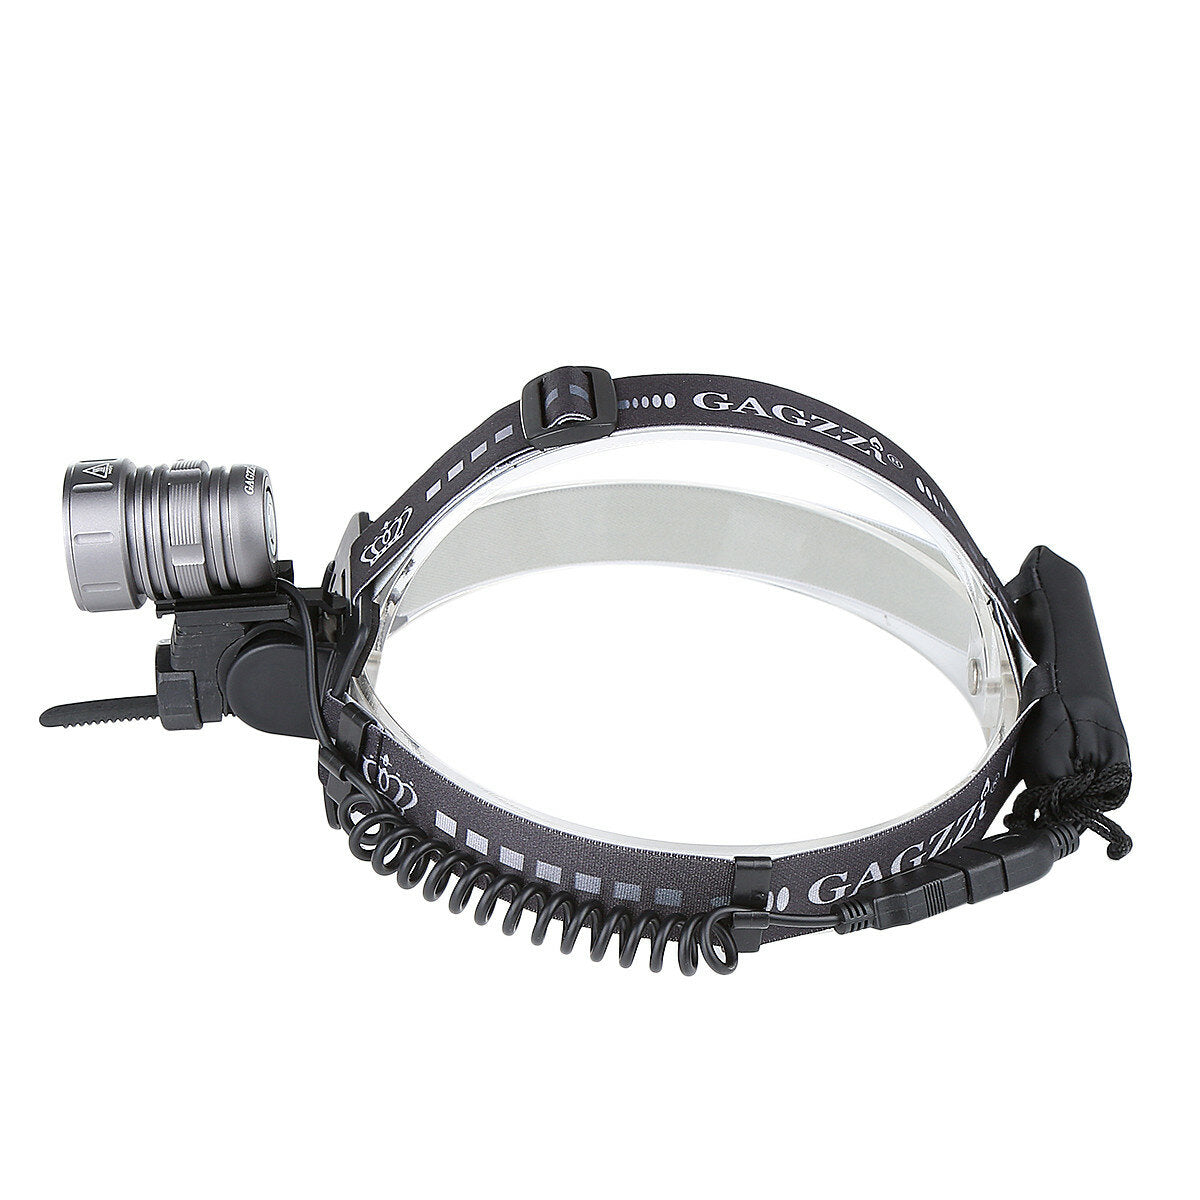 1200lm LED Headlamp USB Rechargeable 4 Mode Super Bright Flashlight Bike Headlight Camping Running Cycling Fishing